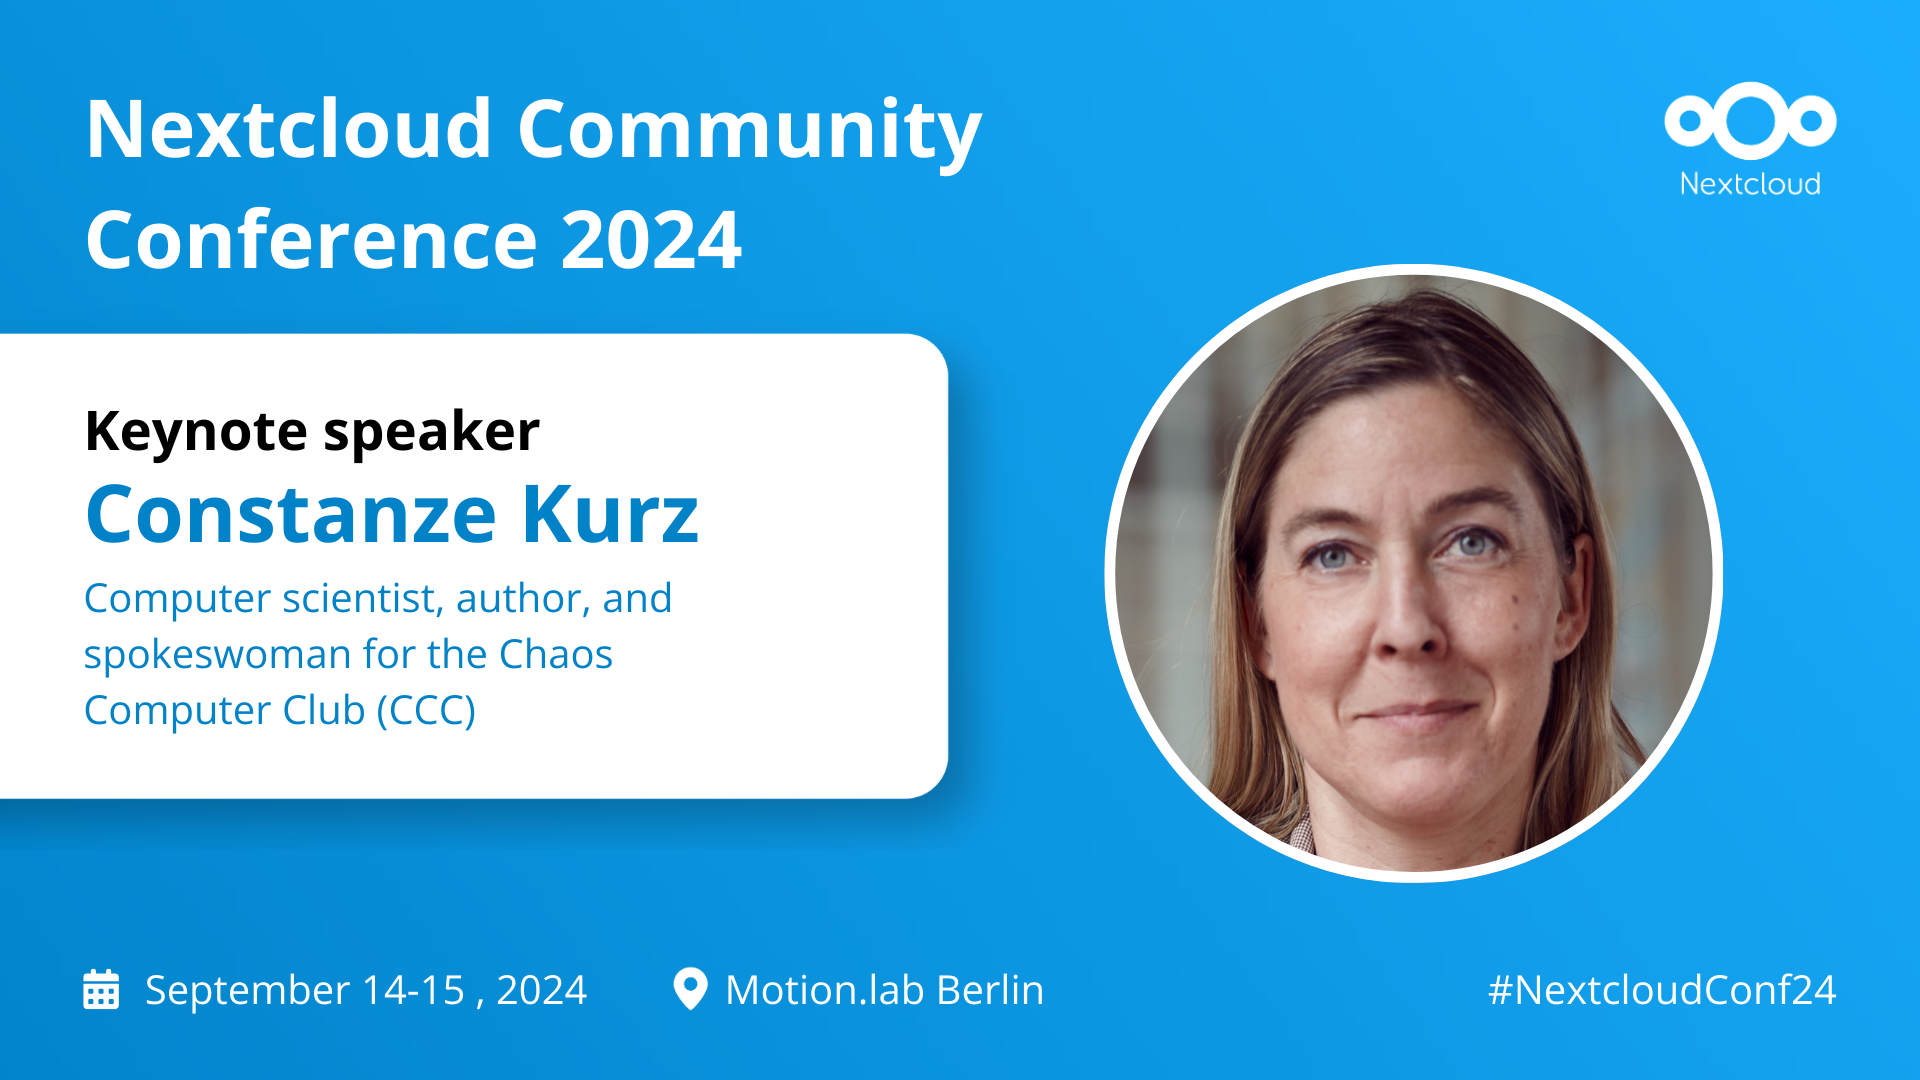 Nextcloud Community Conference keynote speaker - Constanze Kurz